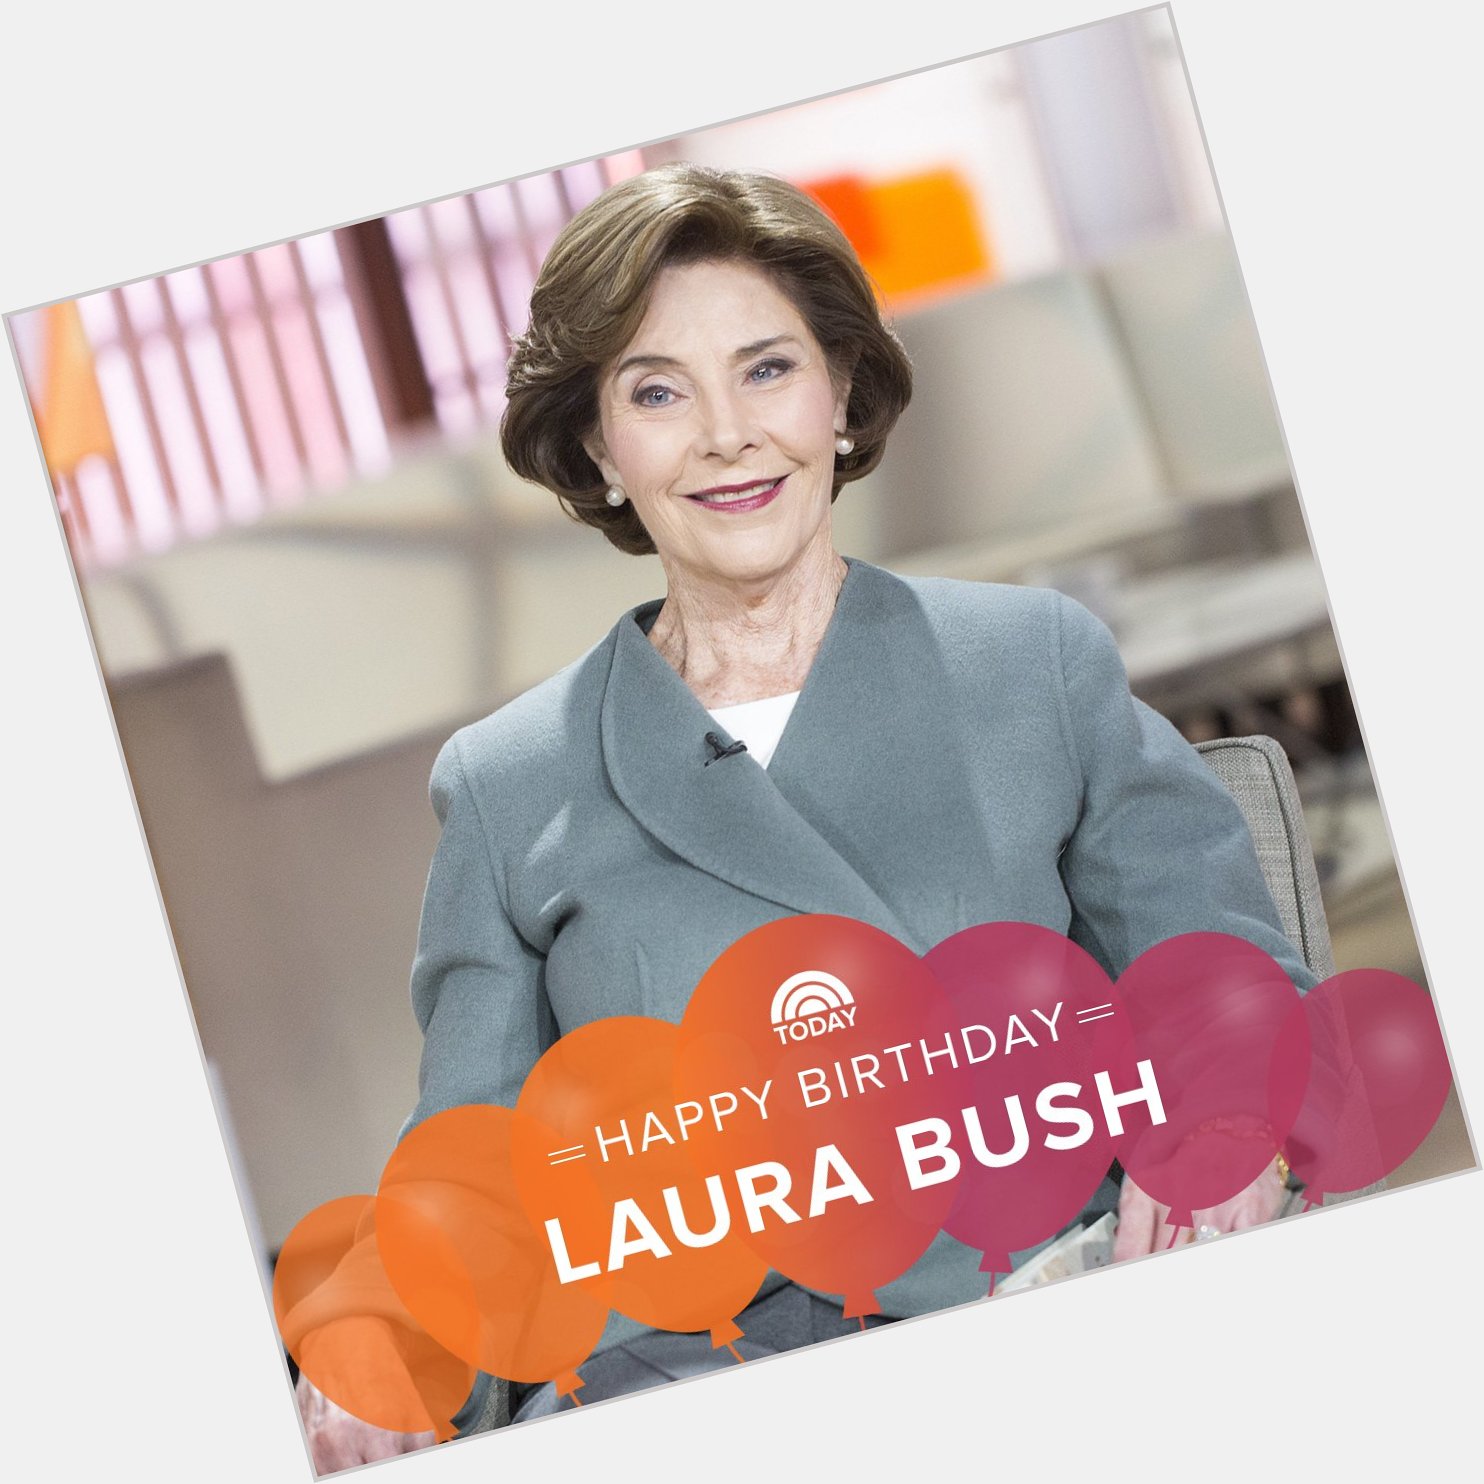 Happy birthday to former first lady Laura Bush!  